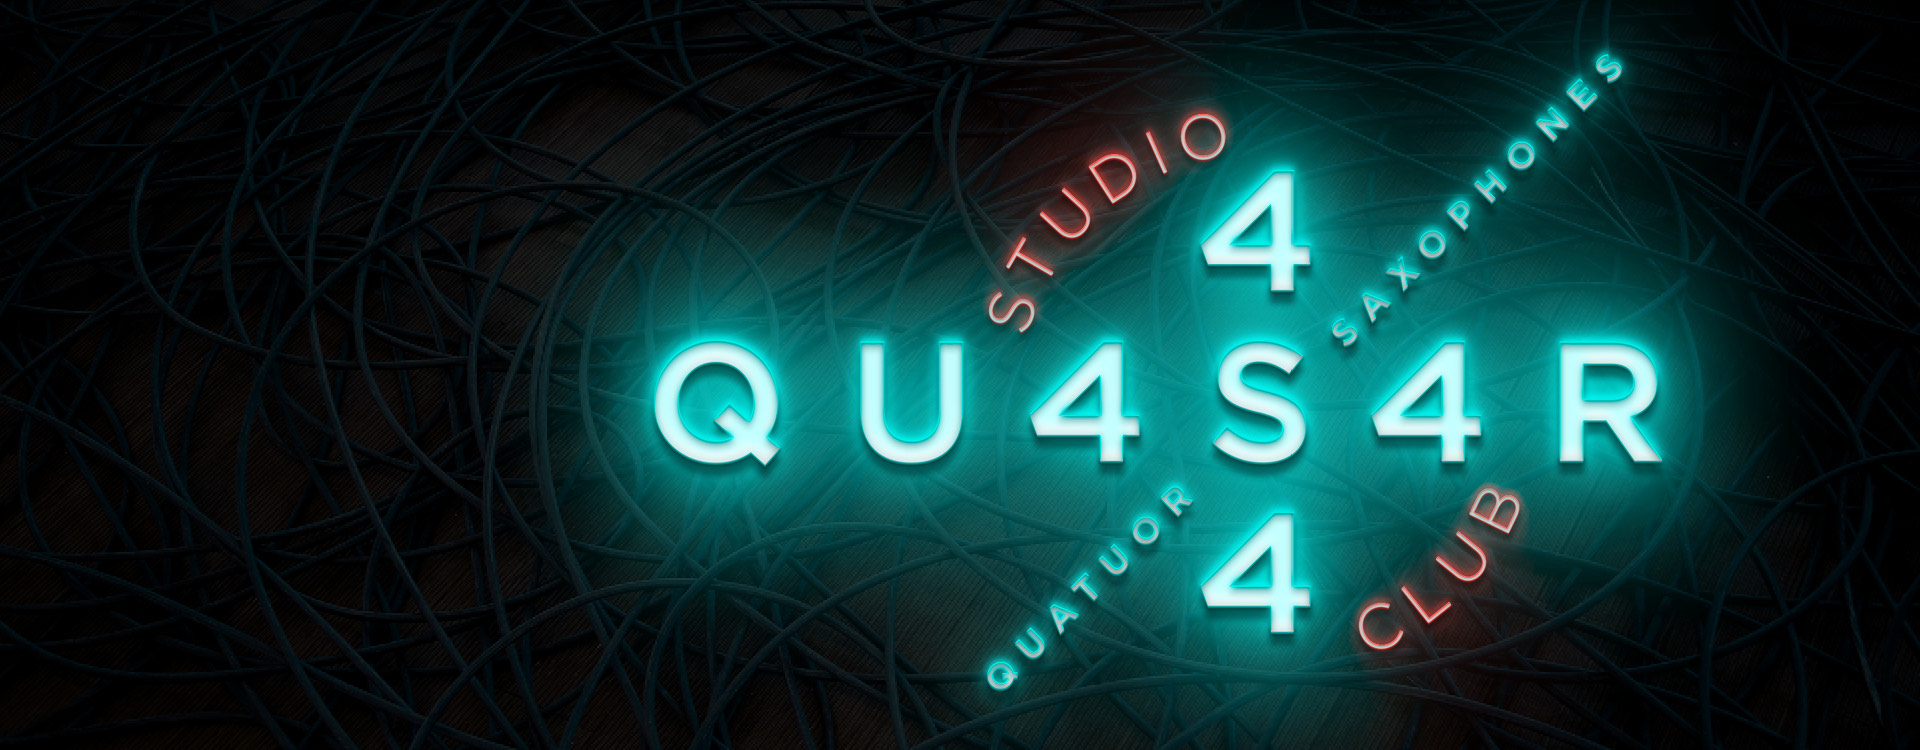 Banner for the Quasar Studio Club